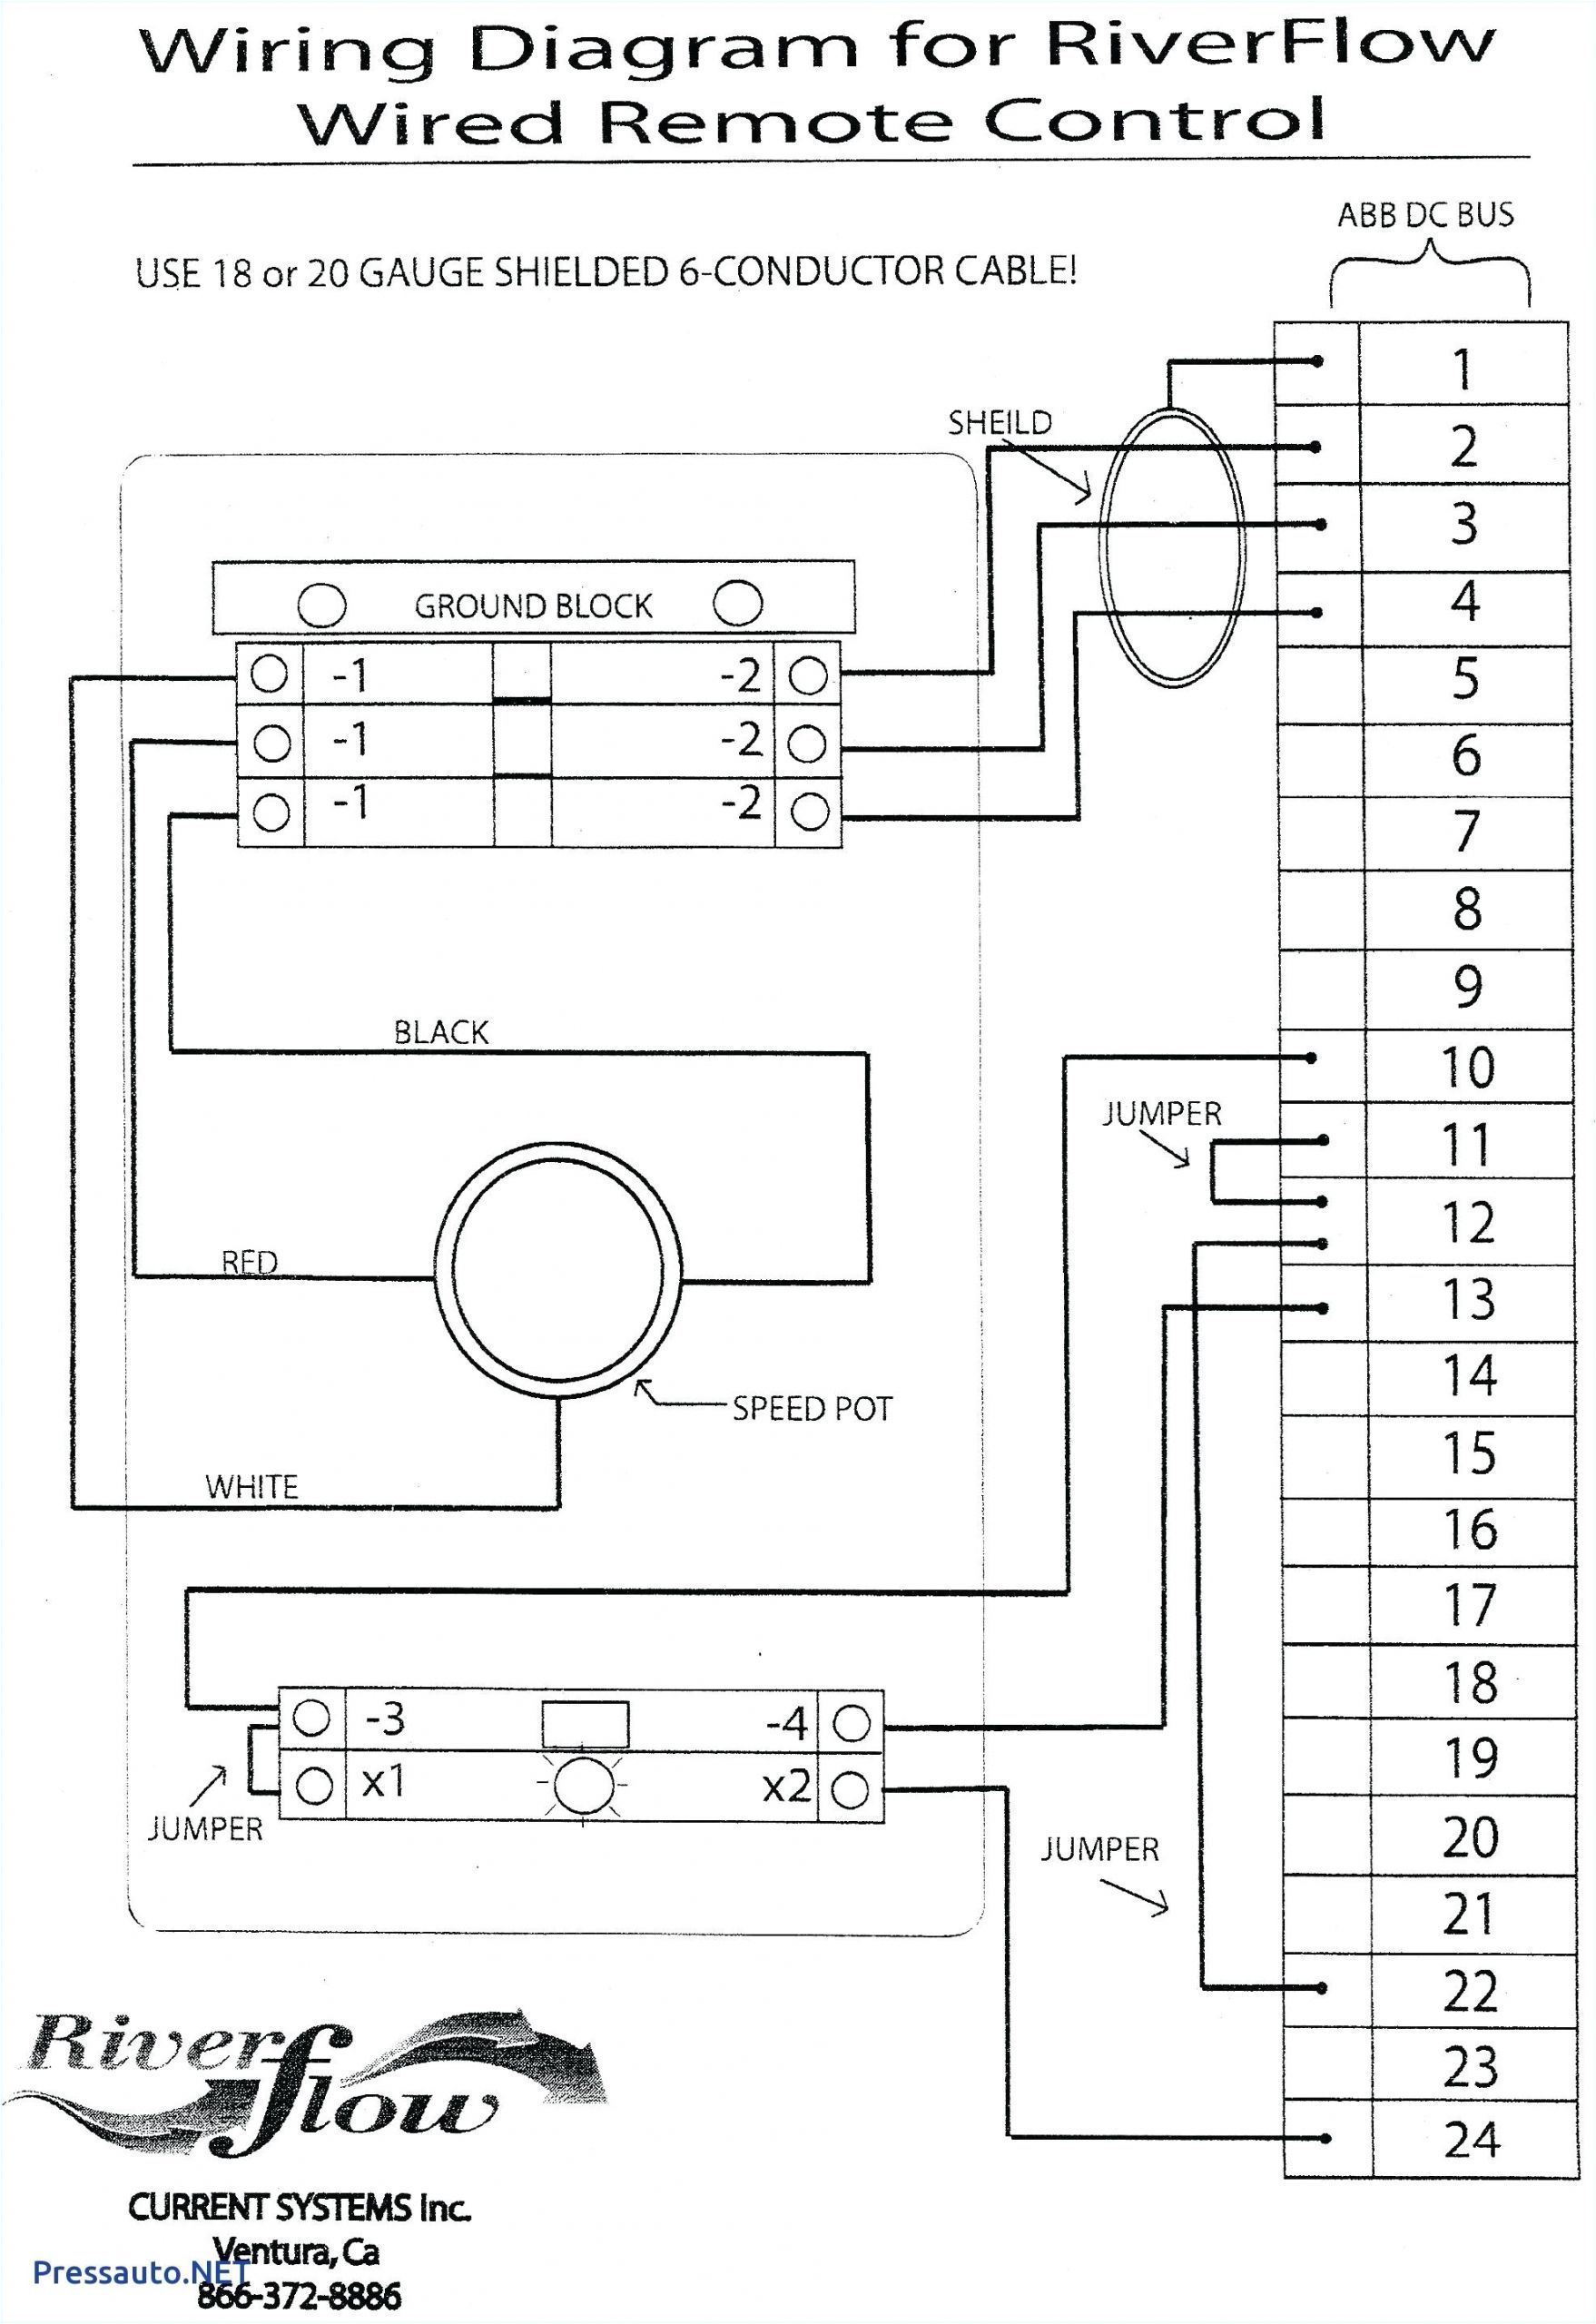 bodine emergency ballast wiring diagram bodine emergency ballast wiring diagram wiring solutions of bodine emergency ballast wiring diagram jpg